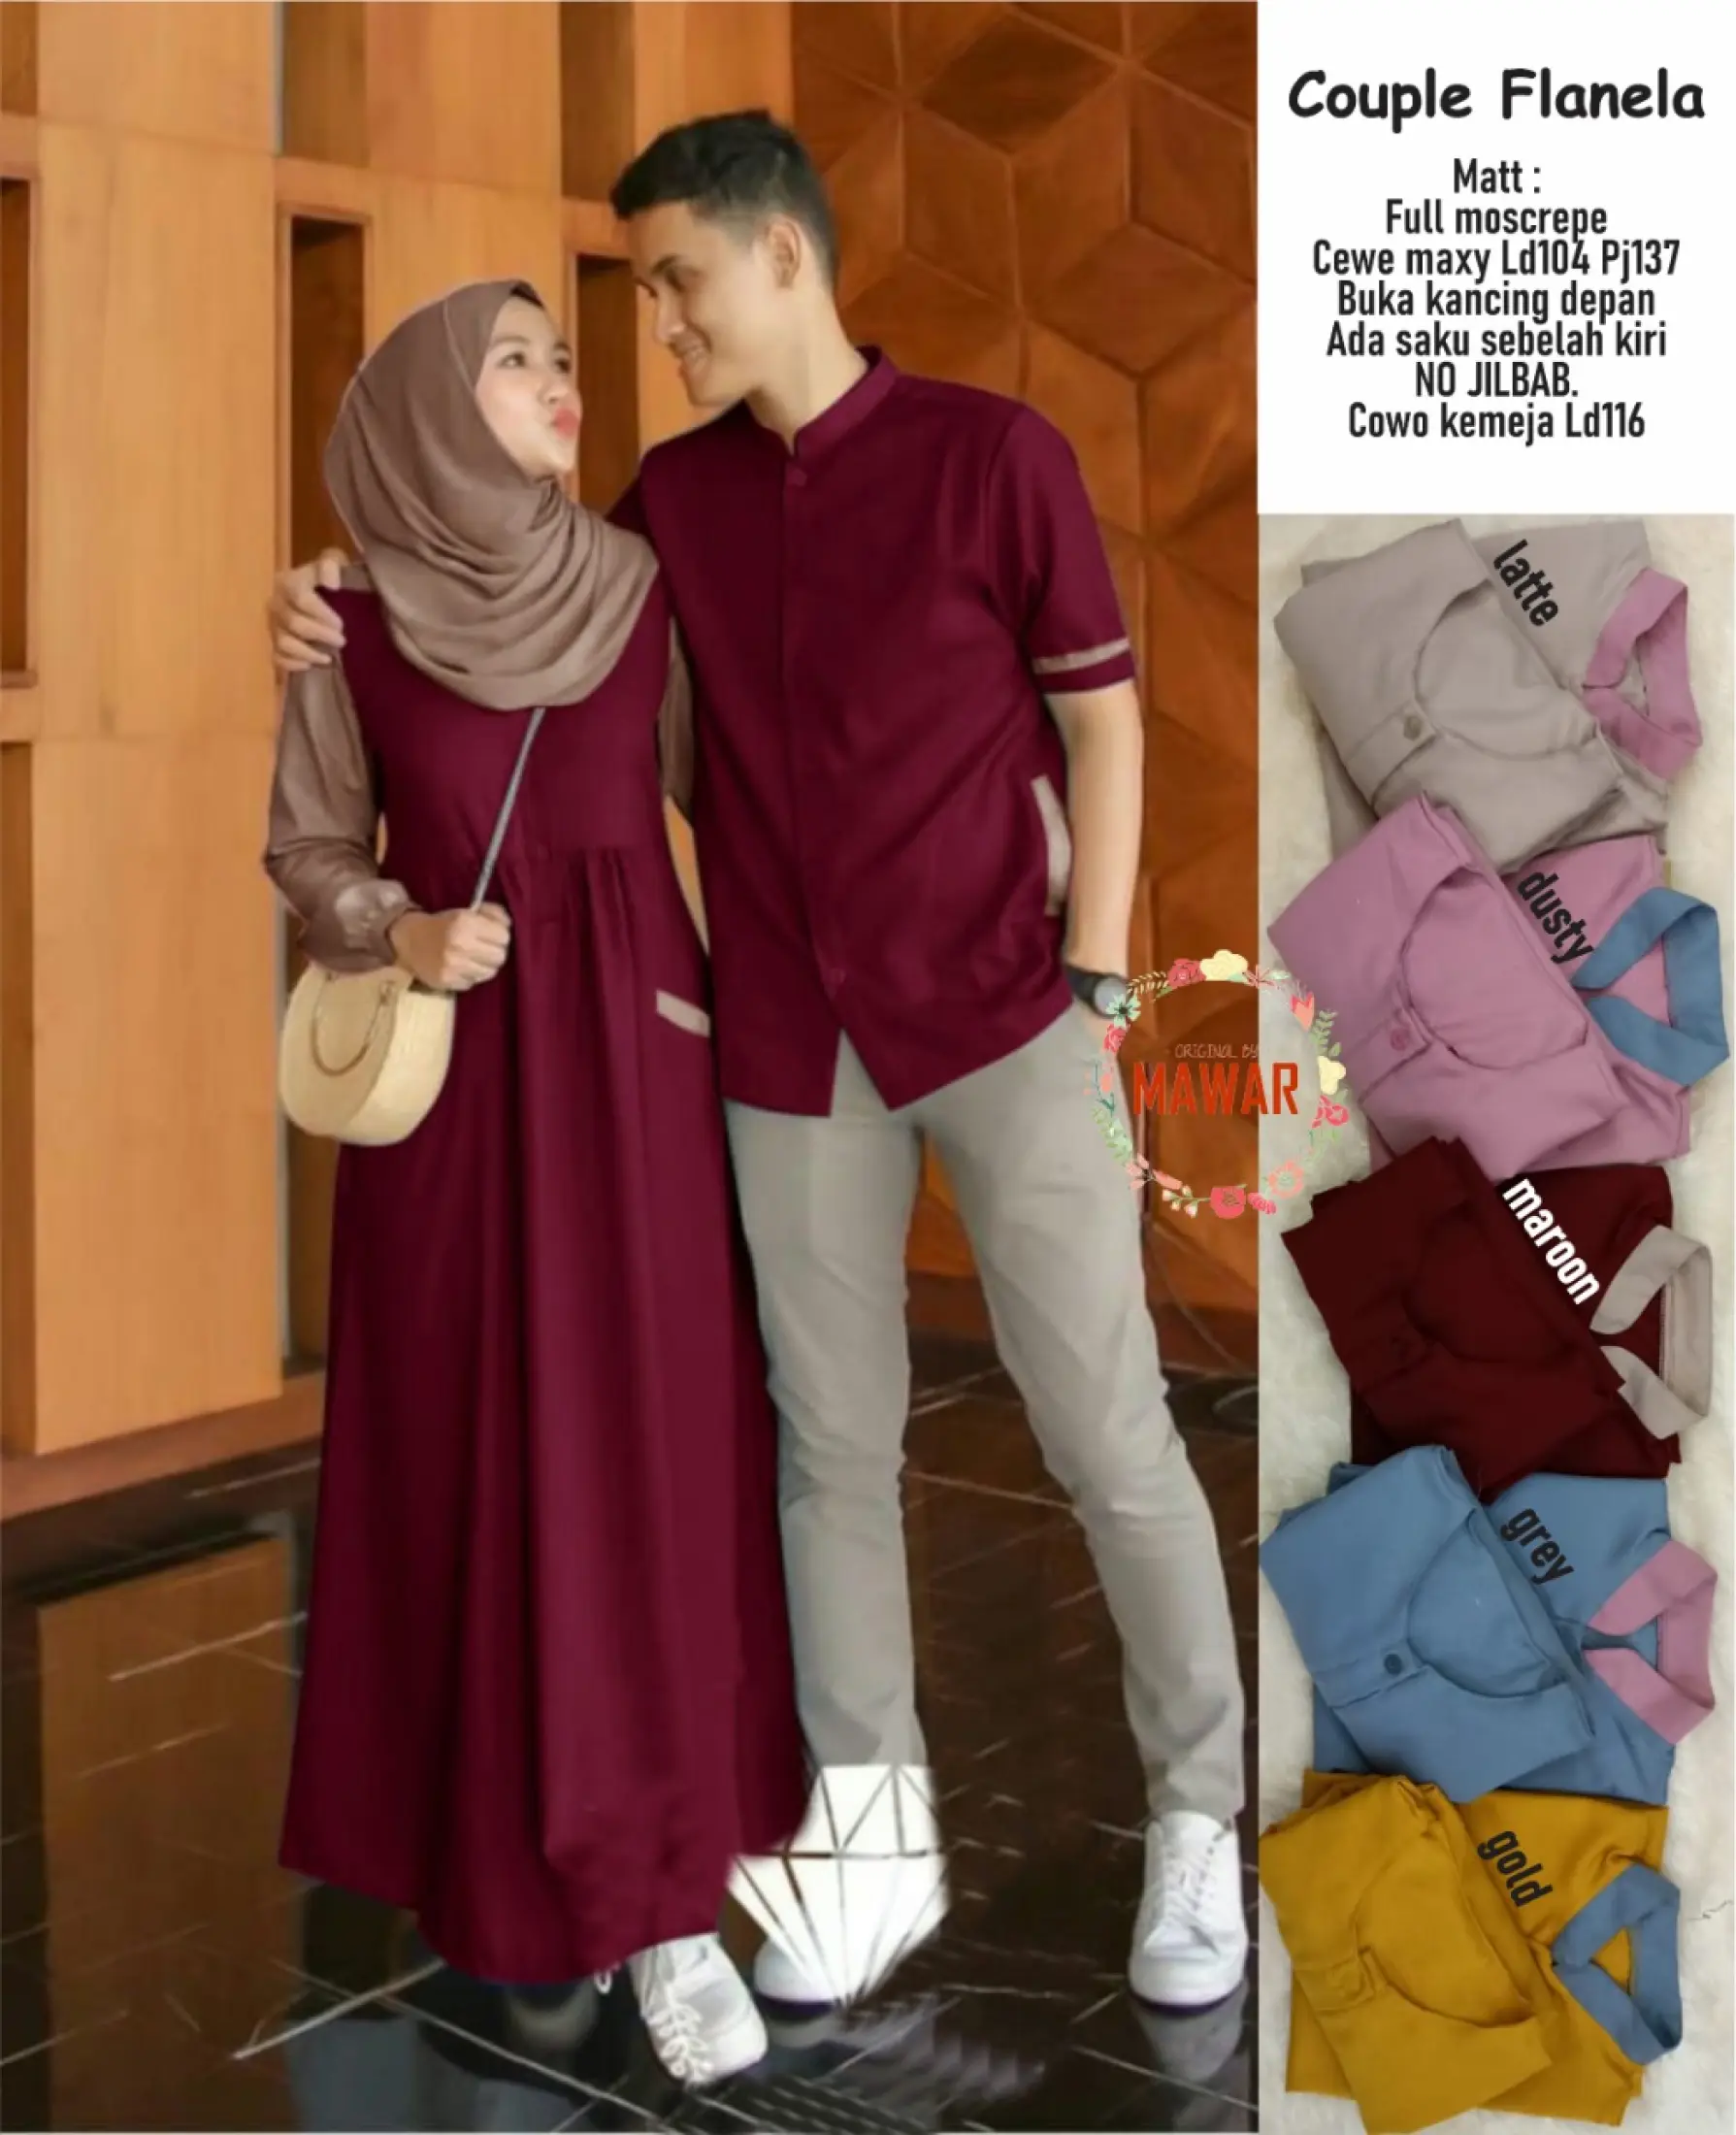 Flanela Couple Baju Muslim Couple Baju Muslim Wanita Baju Muslim Pria Baju Muslim Terbaru Baju Couple Pasangan Baju Couple Keluarga Muslim Couple Gamis Muslim